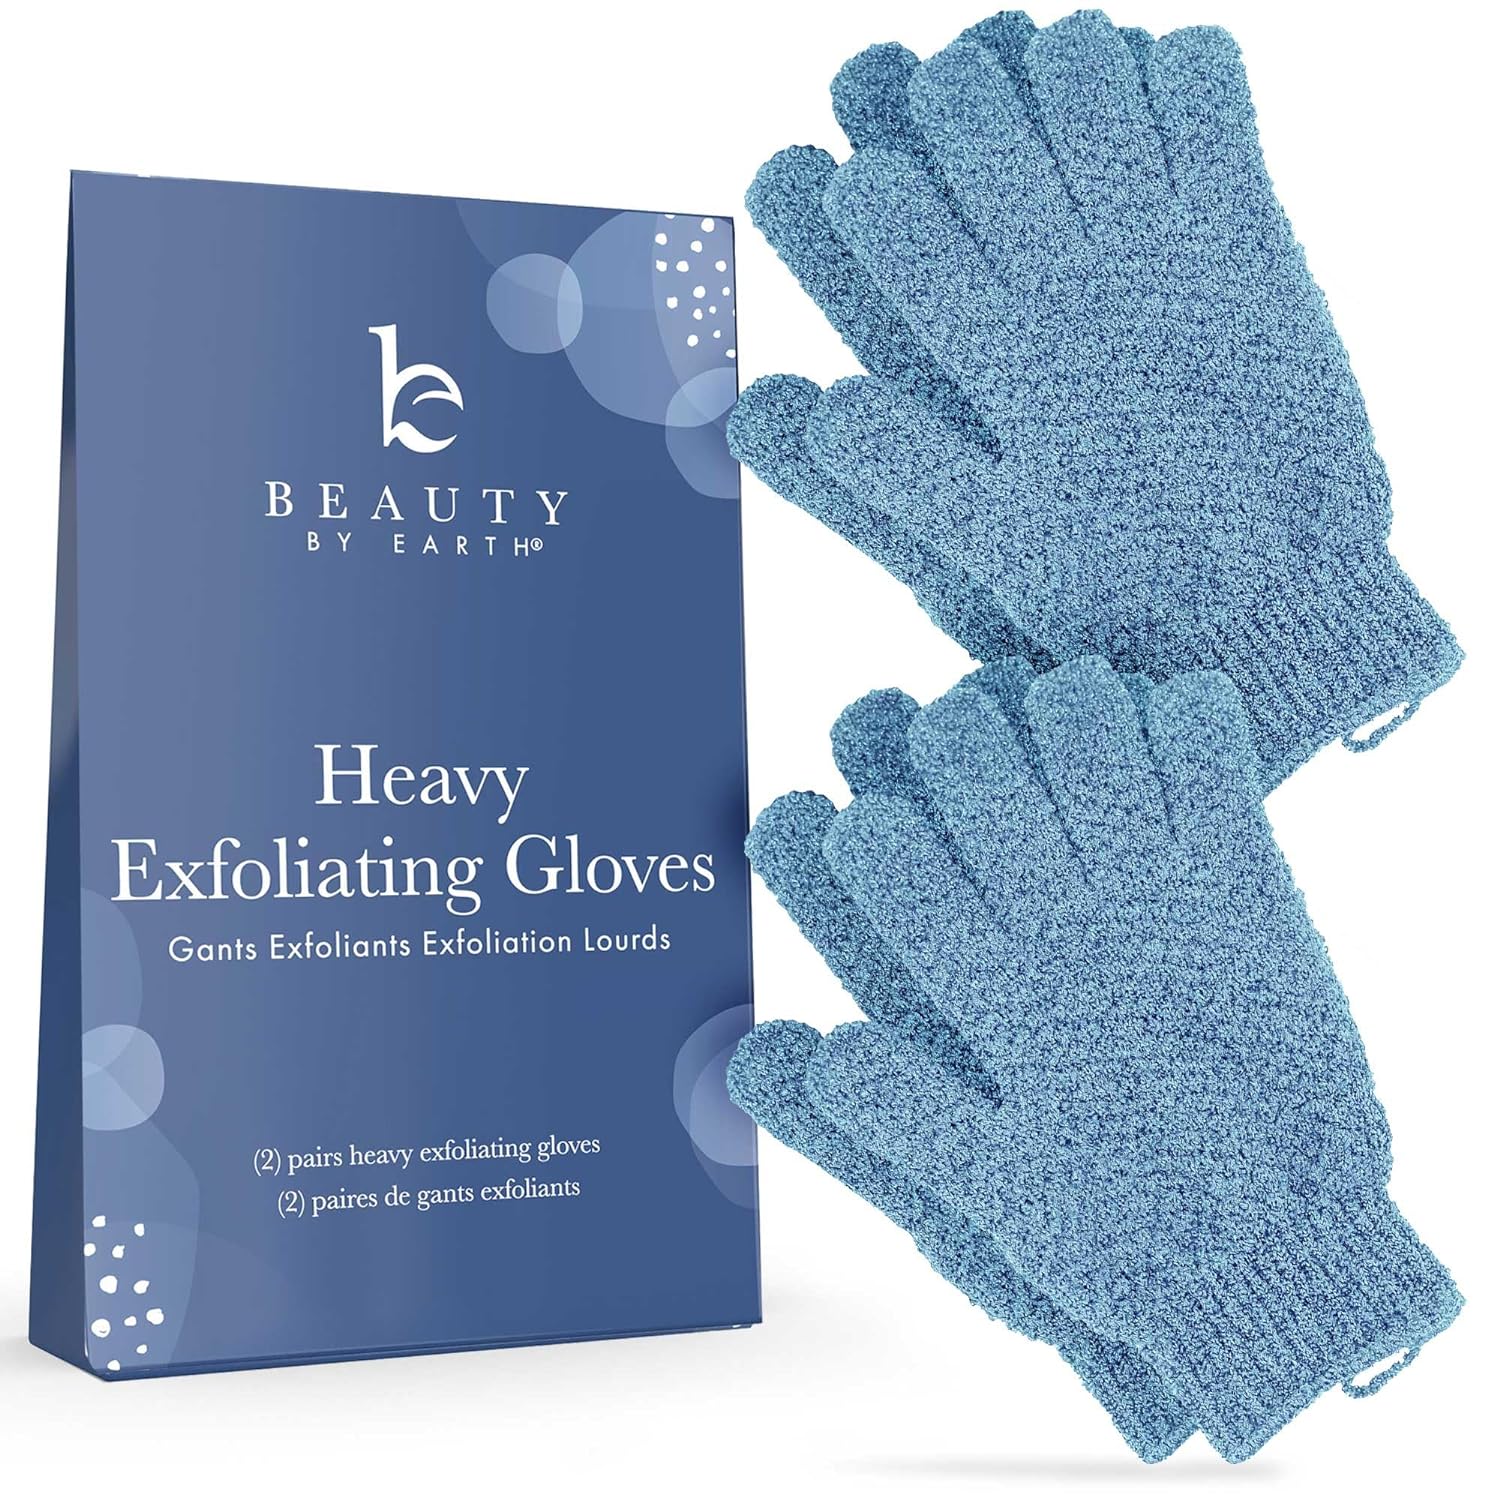 Exfoliating Glove (4 Pcs, 2 Pairs) - Heavy Exfoliate Glove for Dead Skin Bath Exfoliating Gloves for Shower Spa Massage & Body Scrub - Shower Gloves Exfoliating for Women & Men